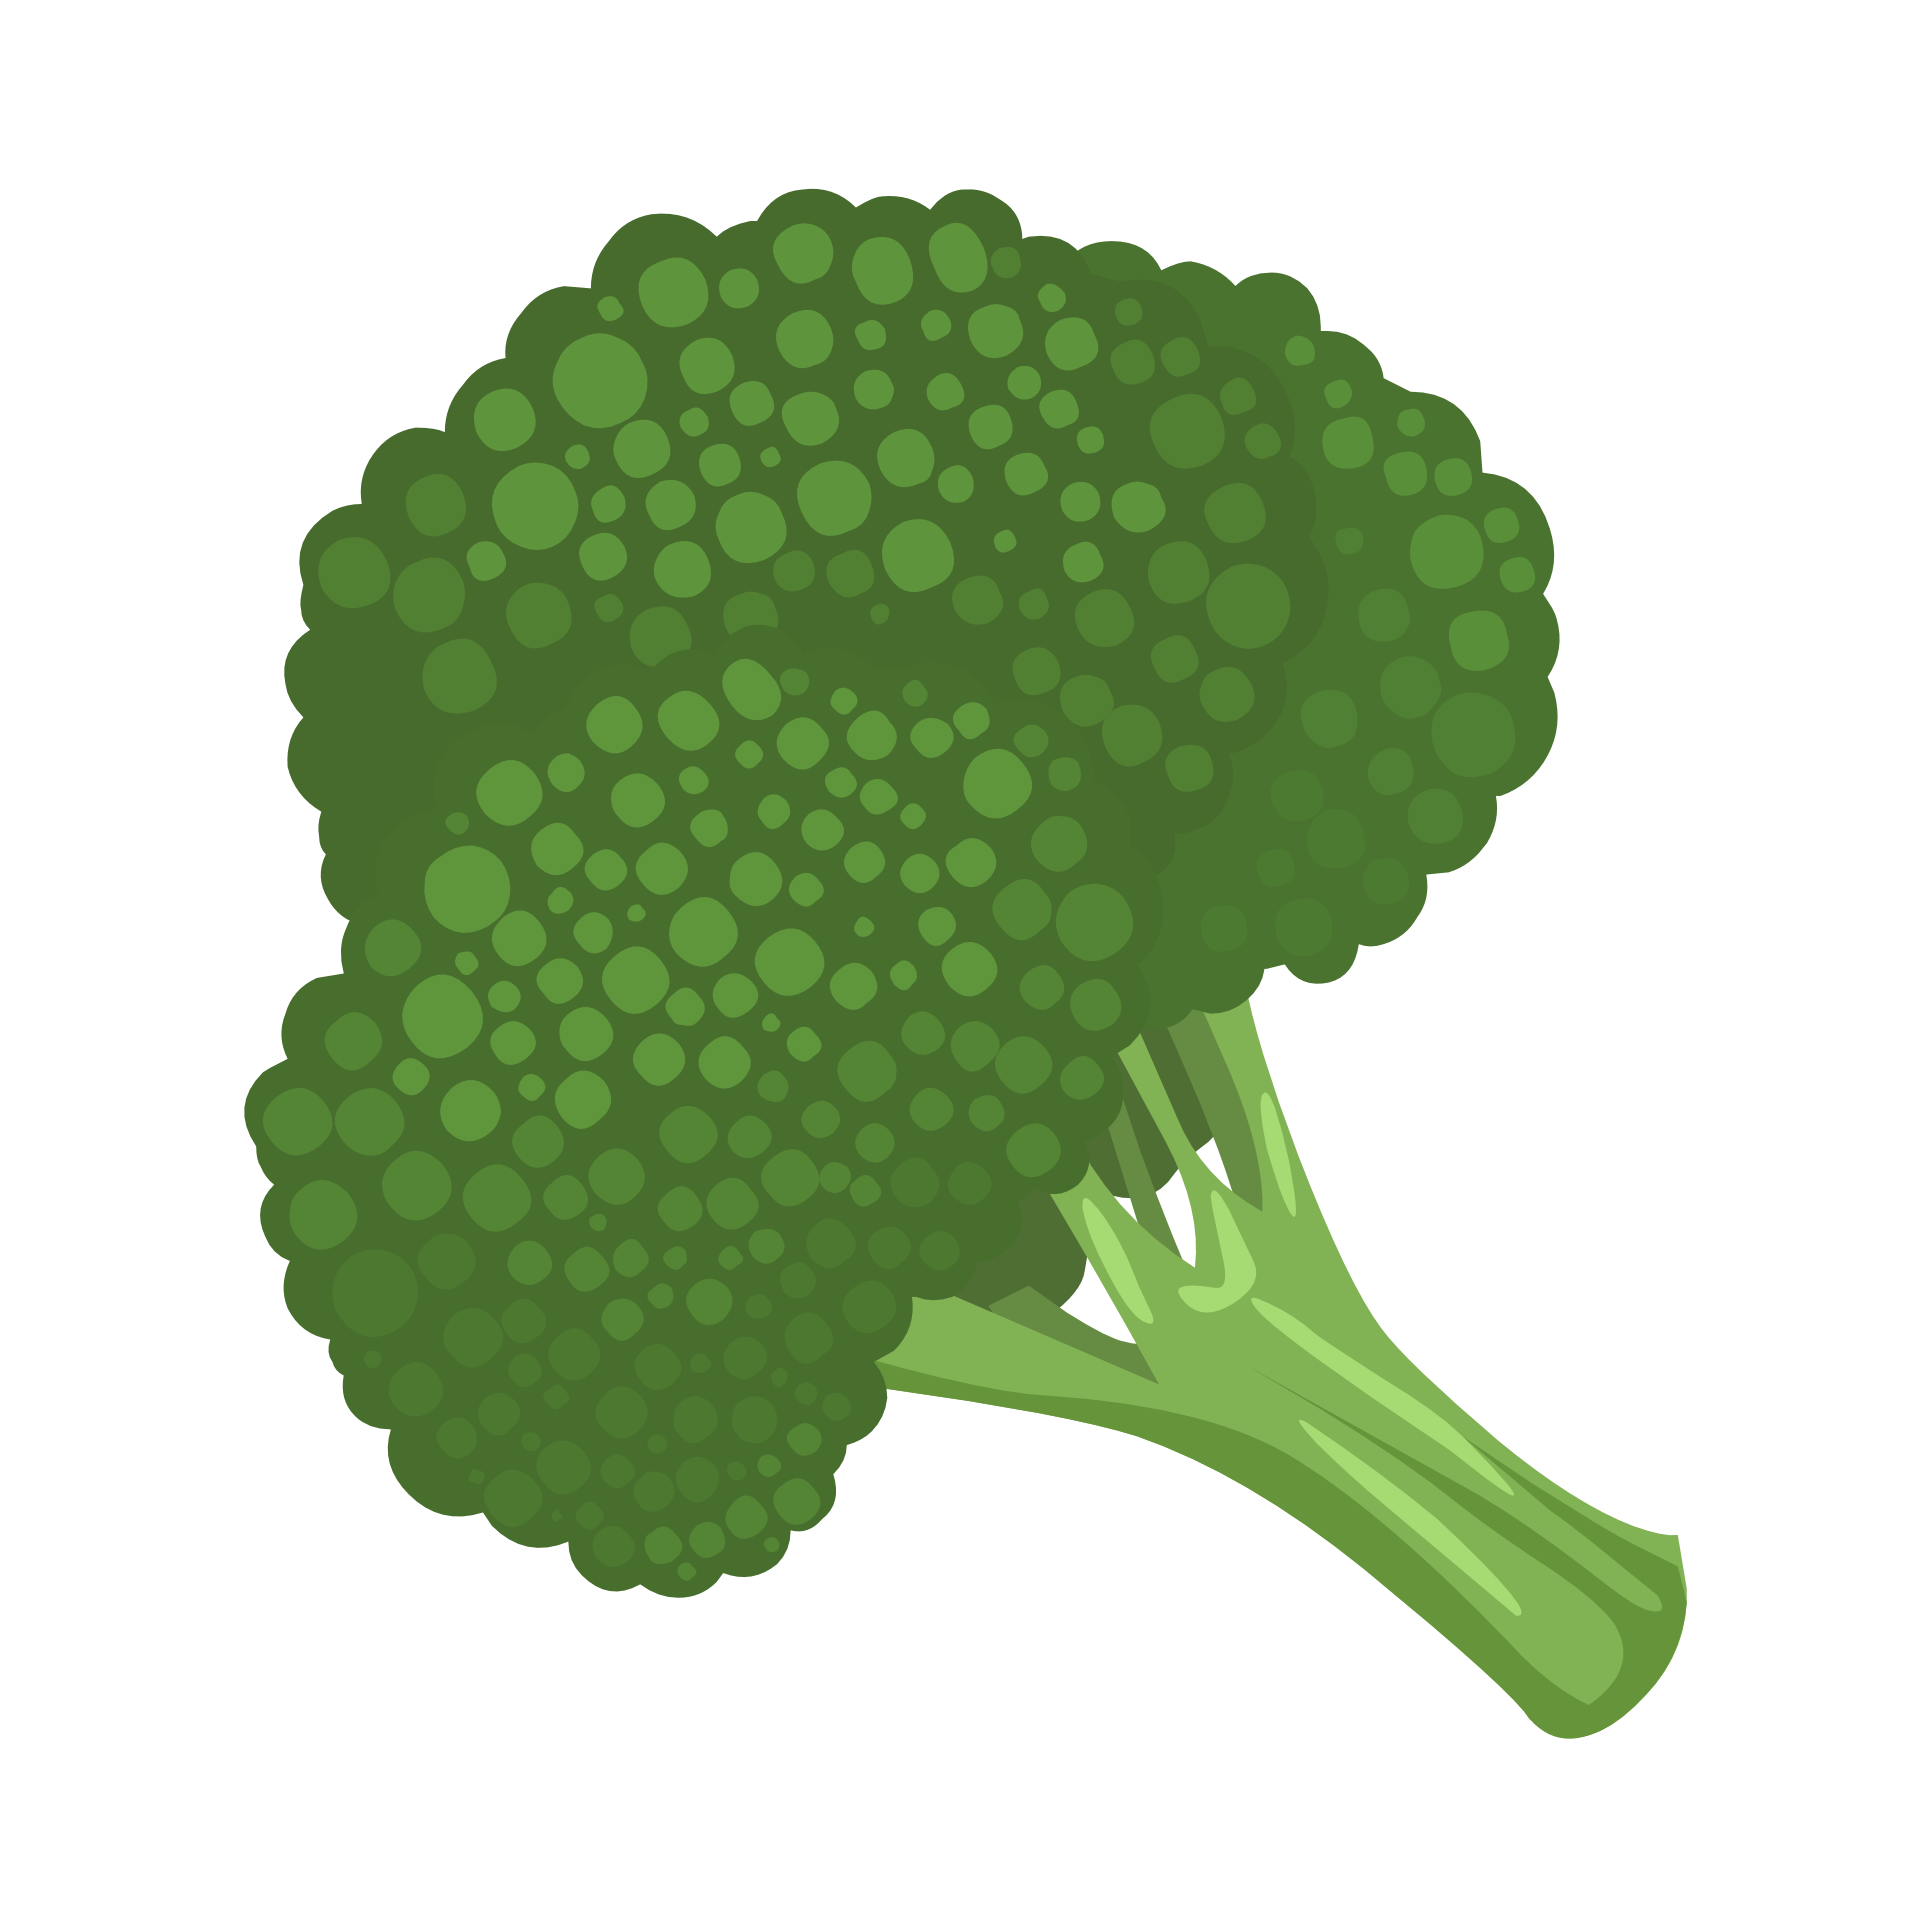 Broccoli clipart green broccoli, Broccoli green broccoli Transparent